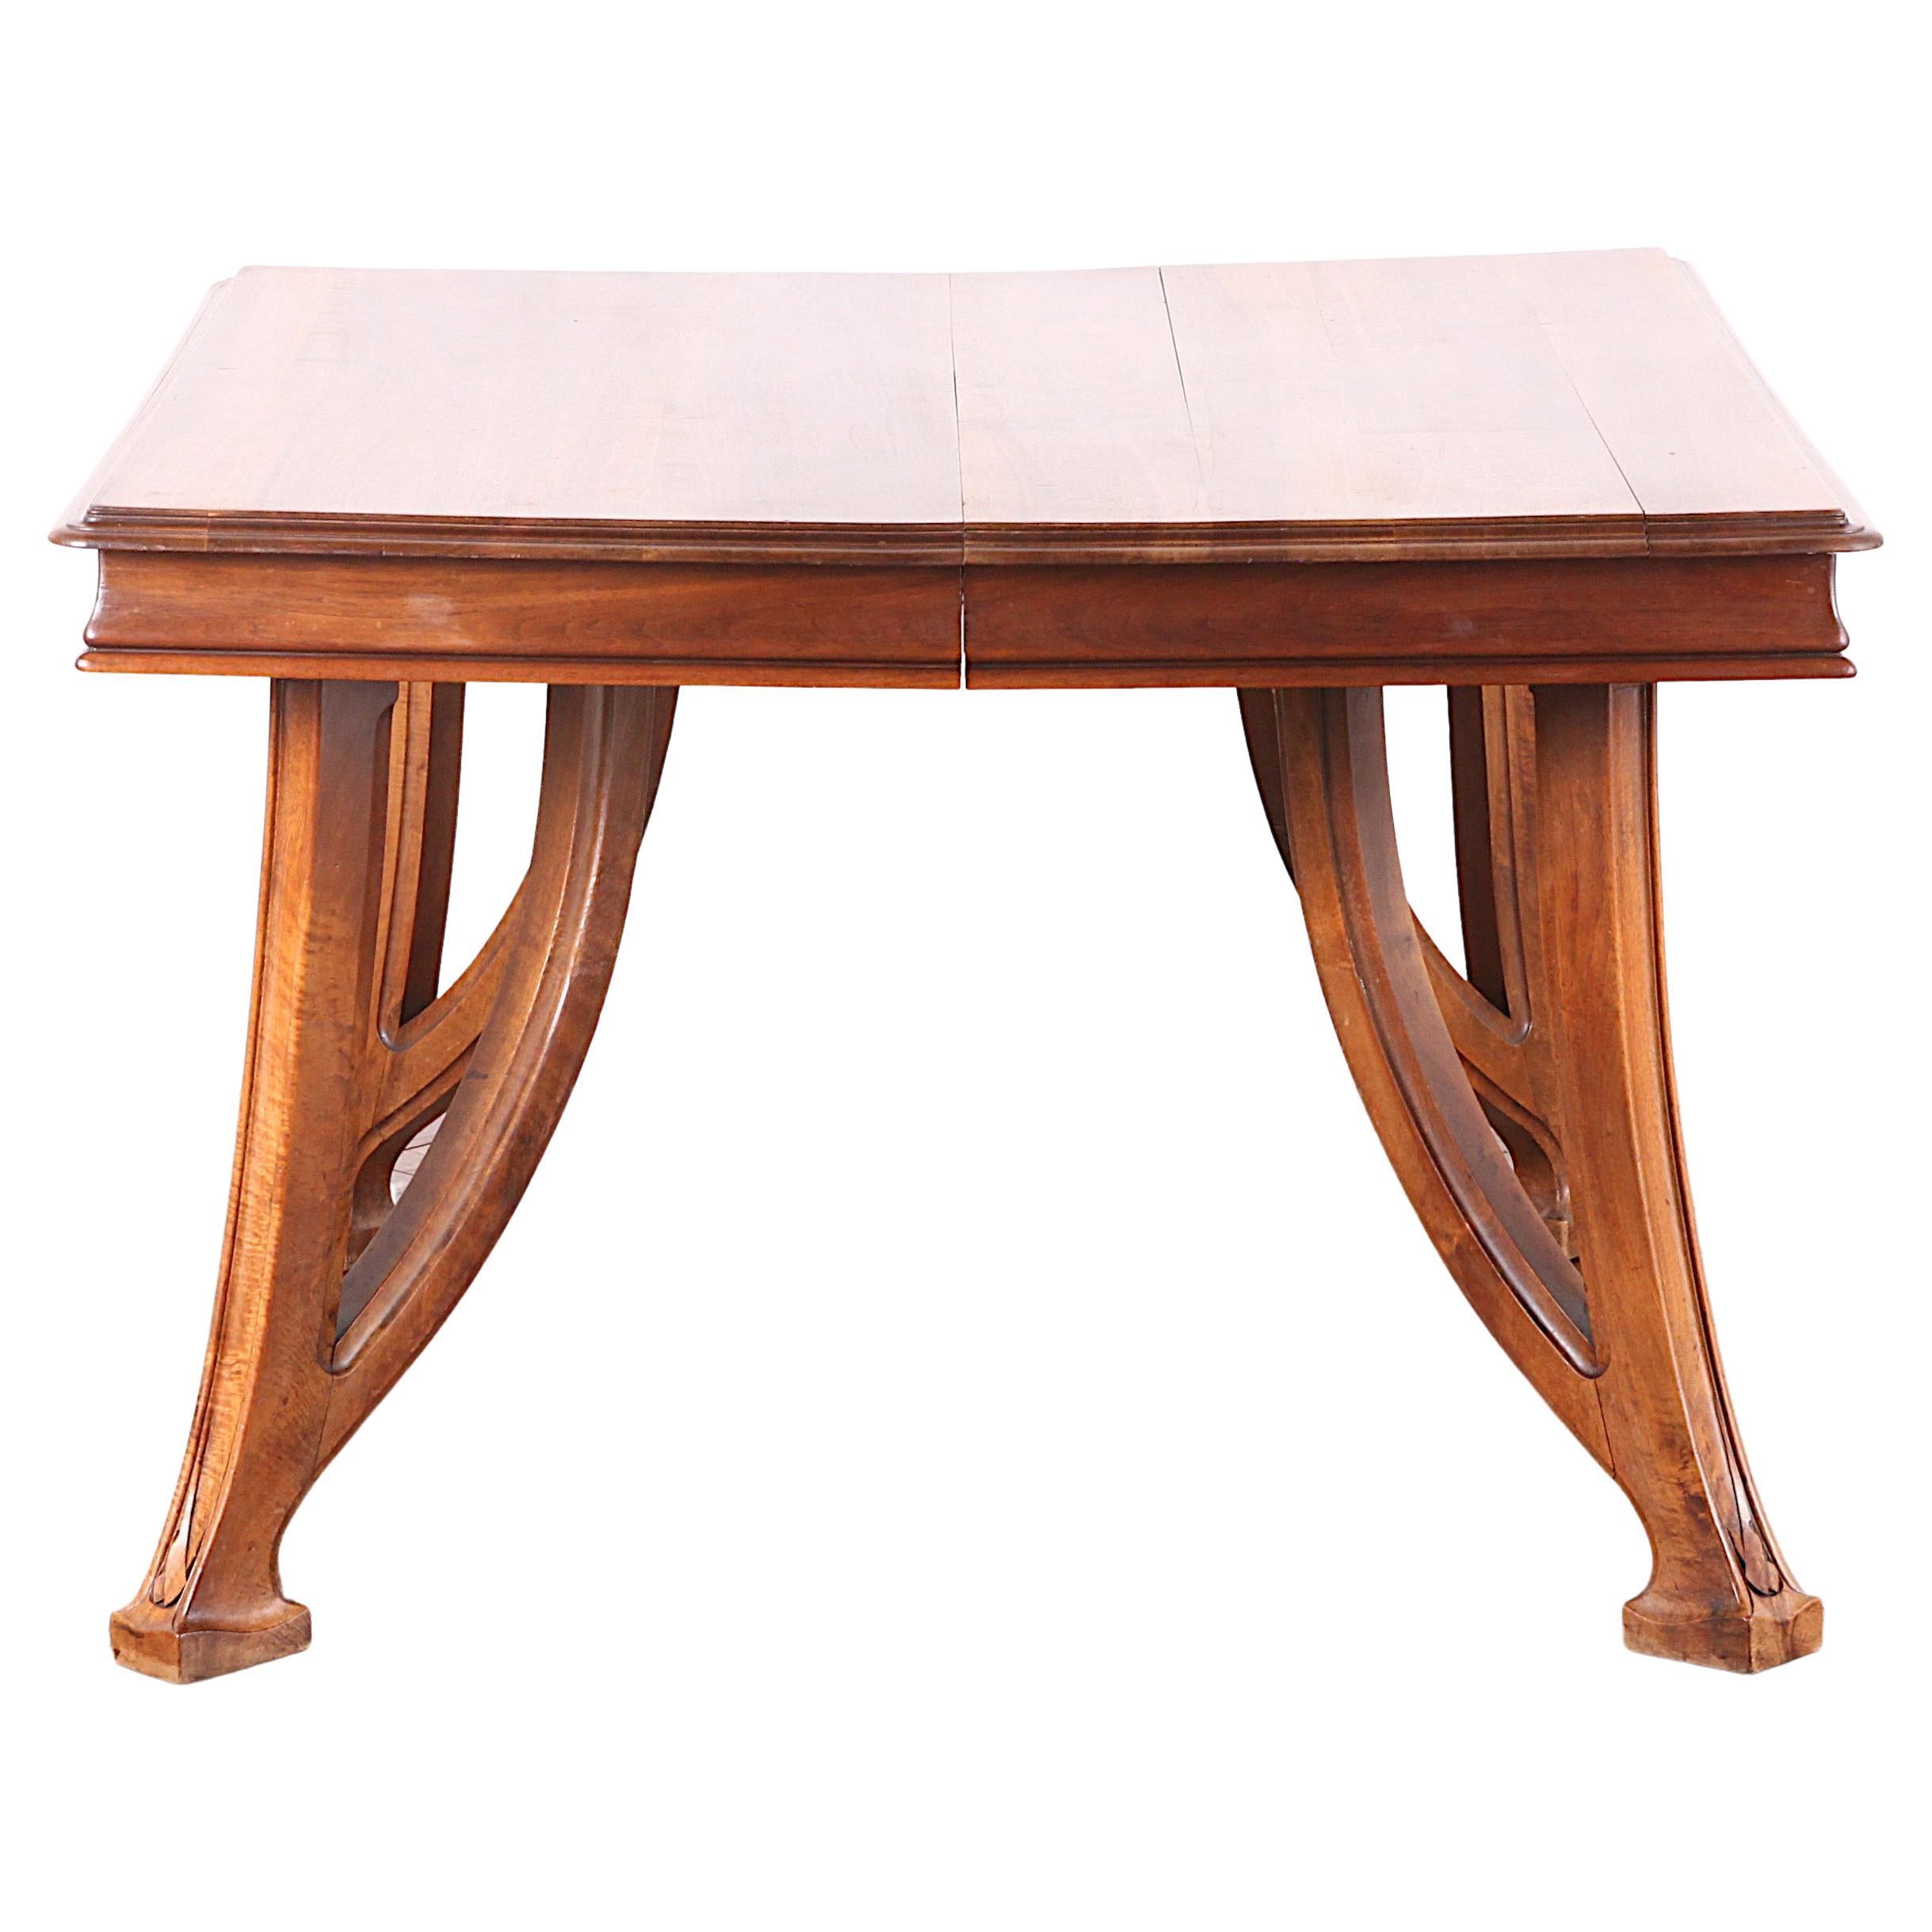 French Walnut Art Nouveau Table